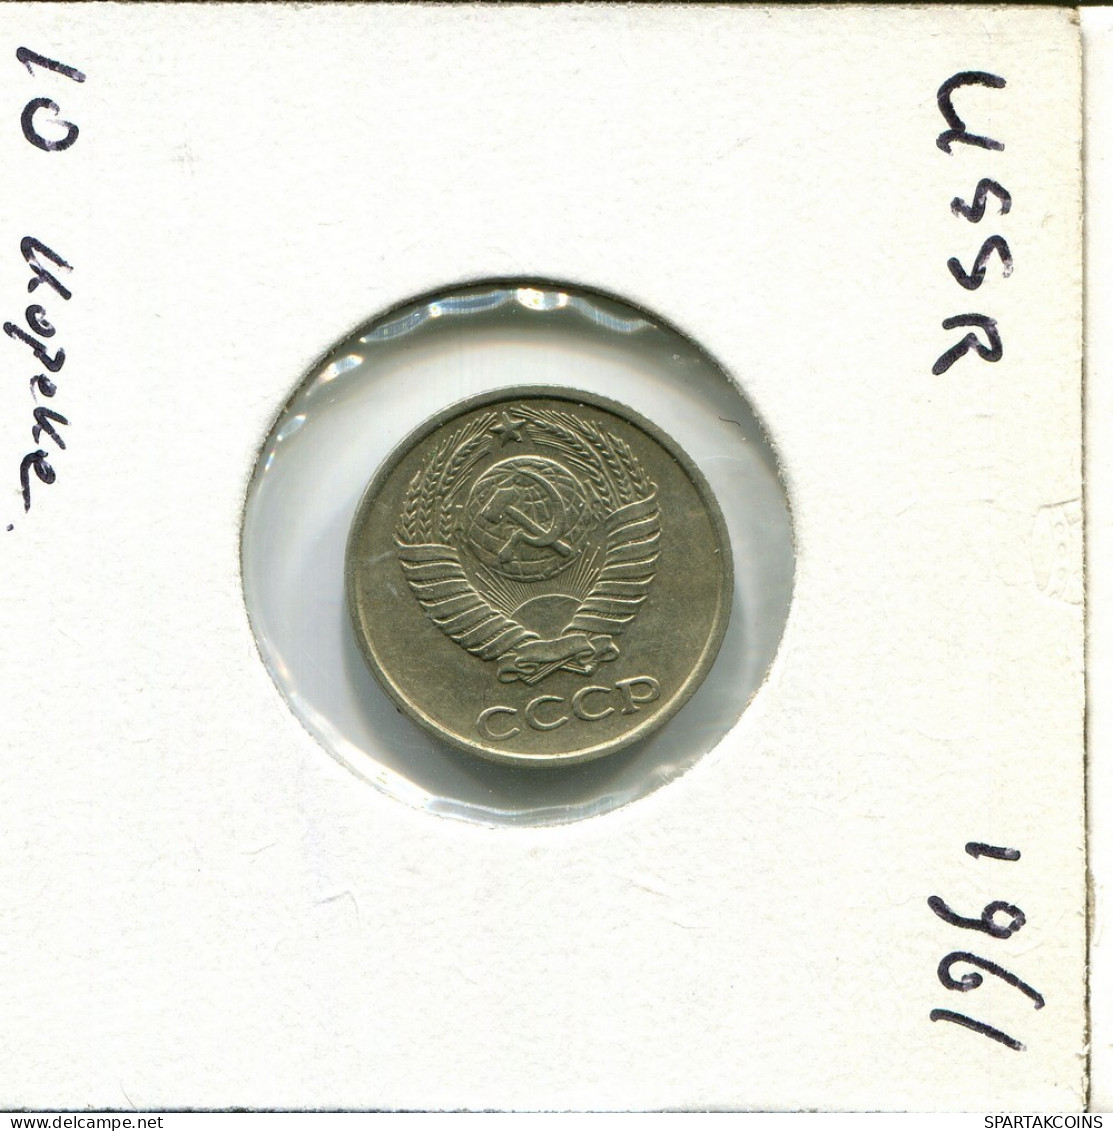 10 KOPEKS 1961 RUSSLAND RUSSIA USSR Münze #AV133.D.A - Russie